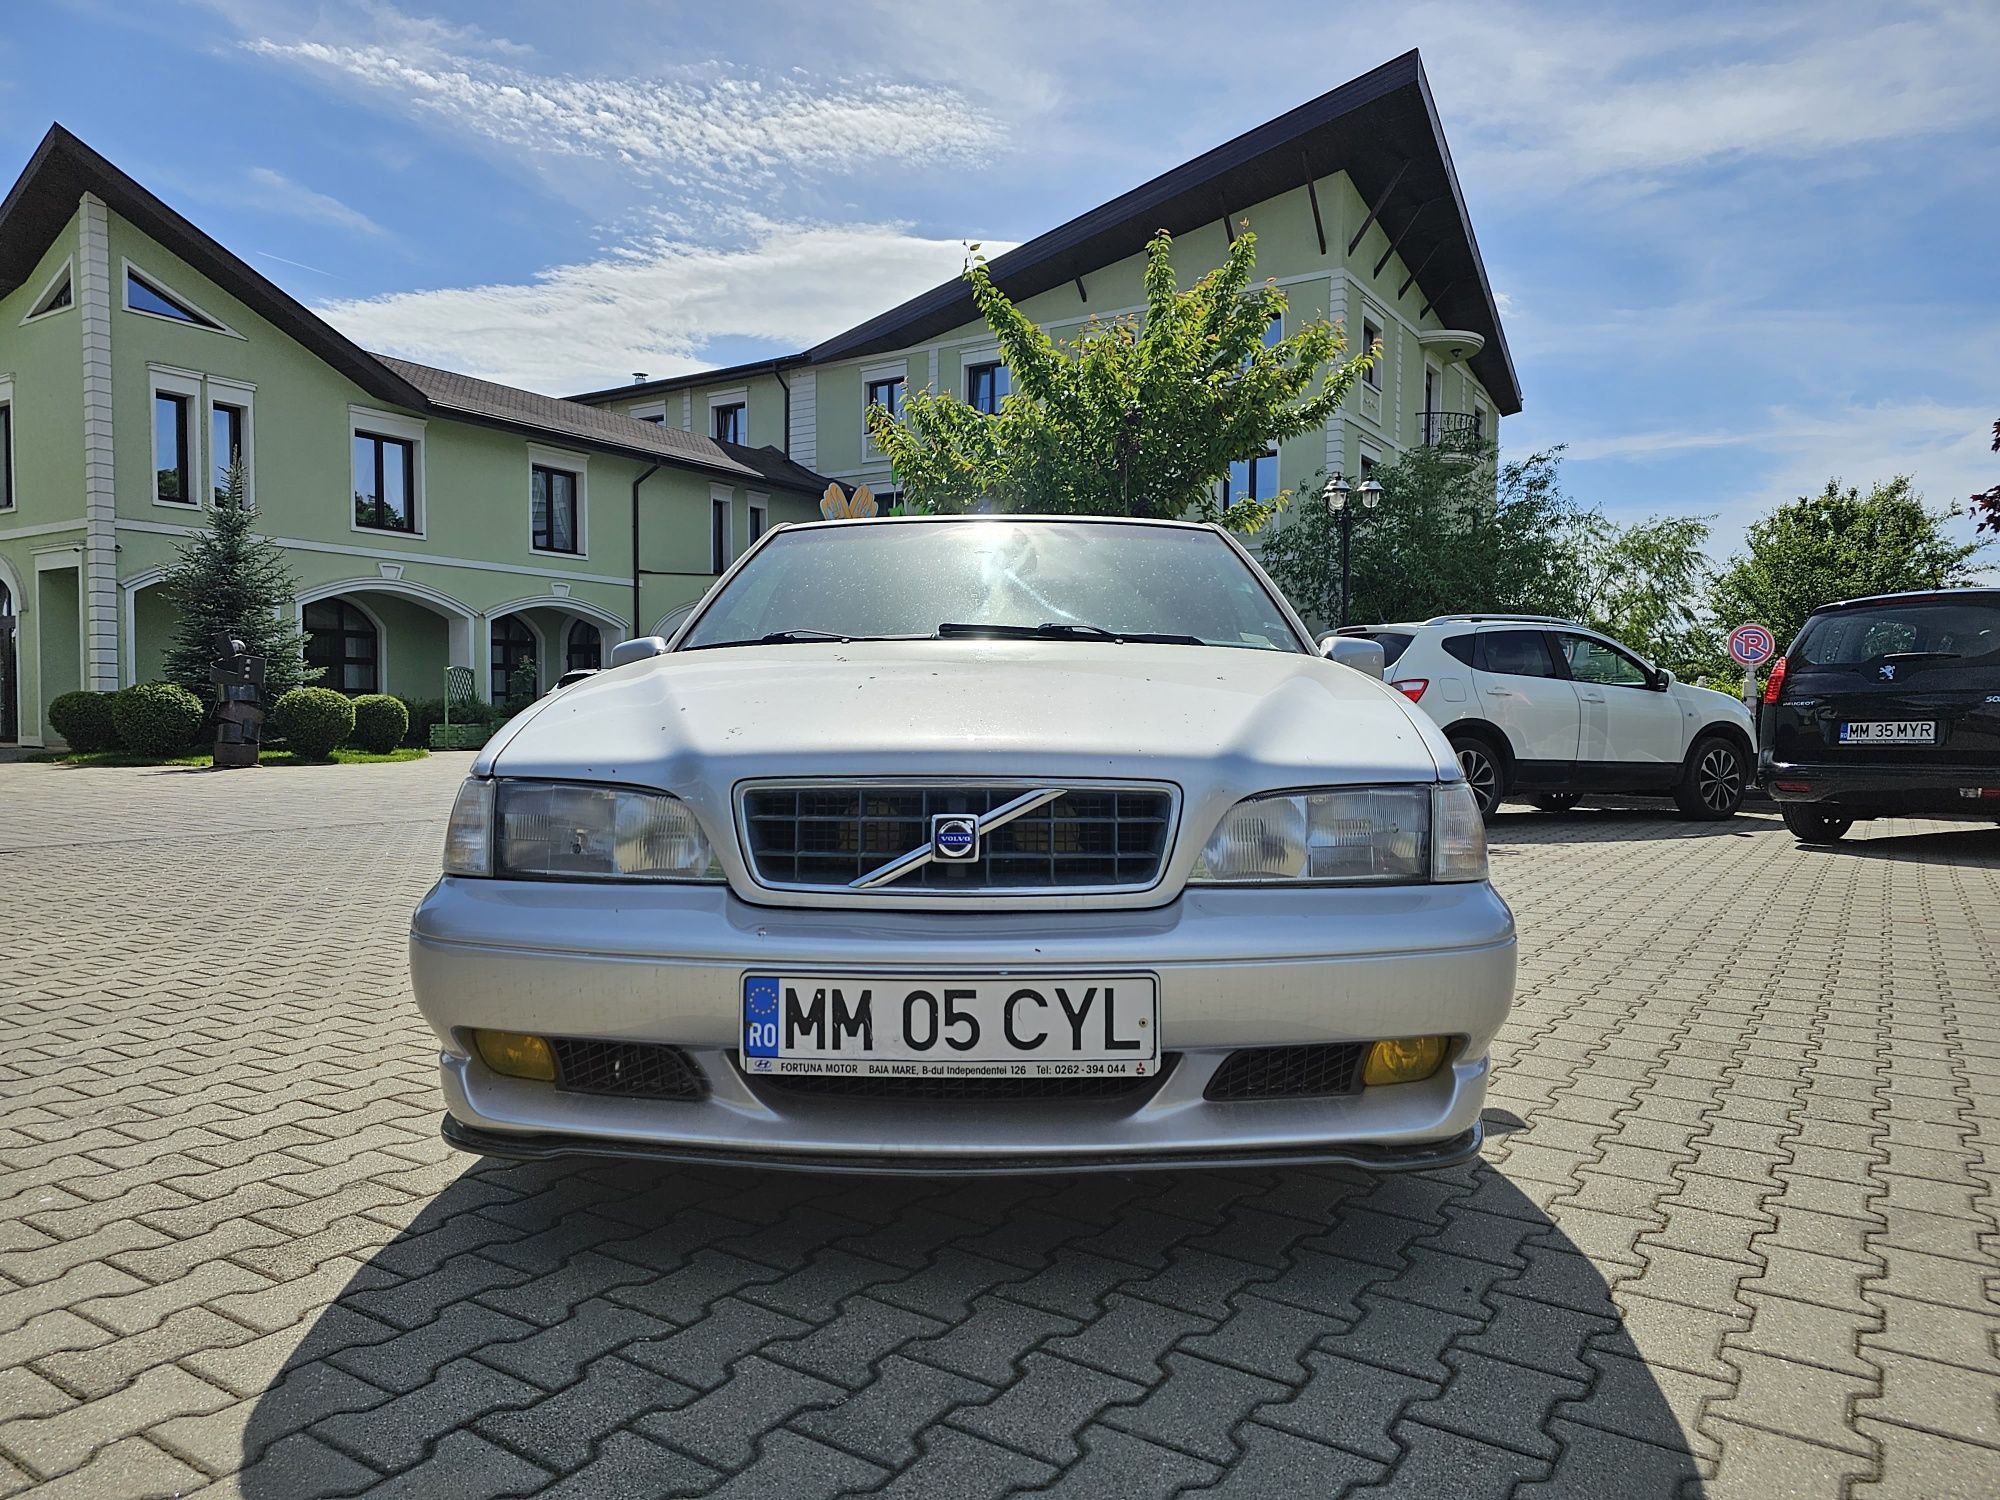 Volvo V70 T5 1999 (5 cilindri turbo)